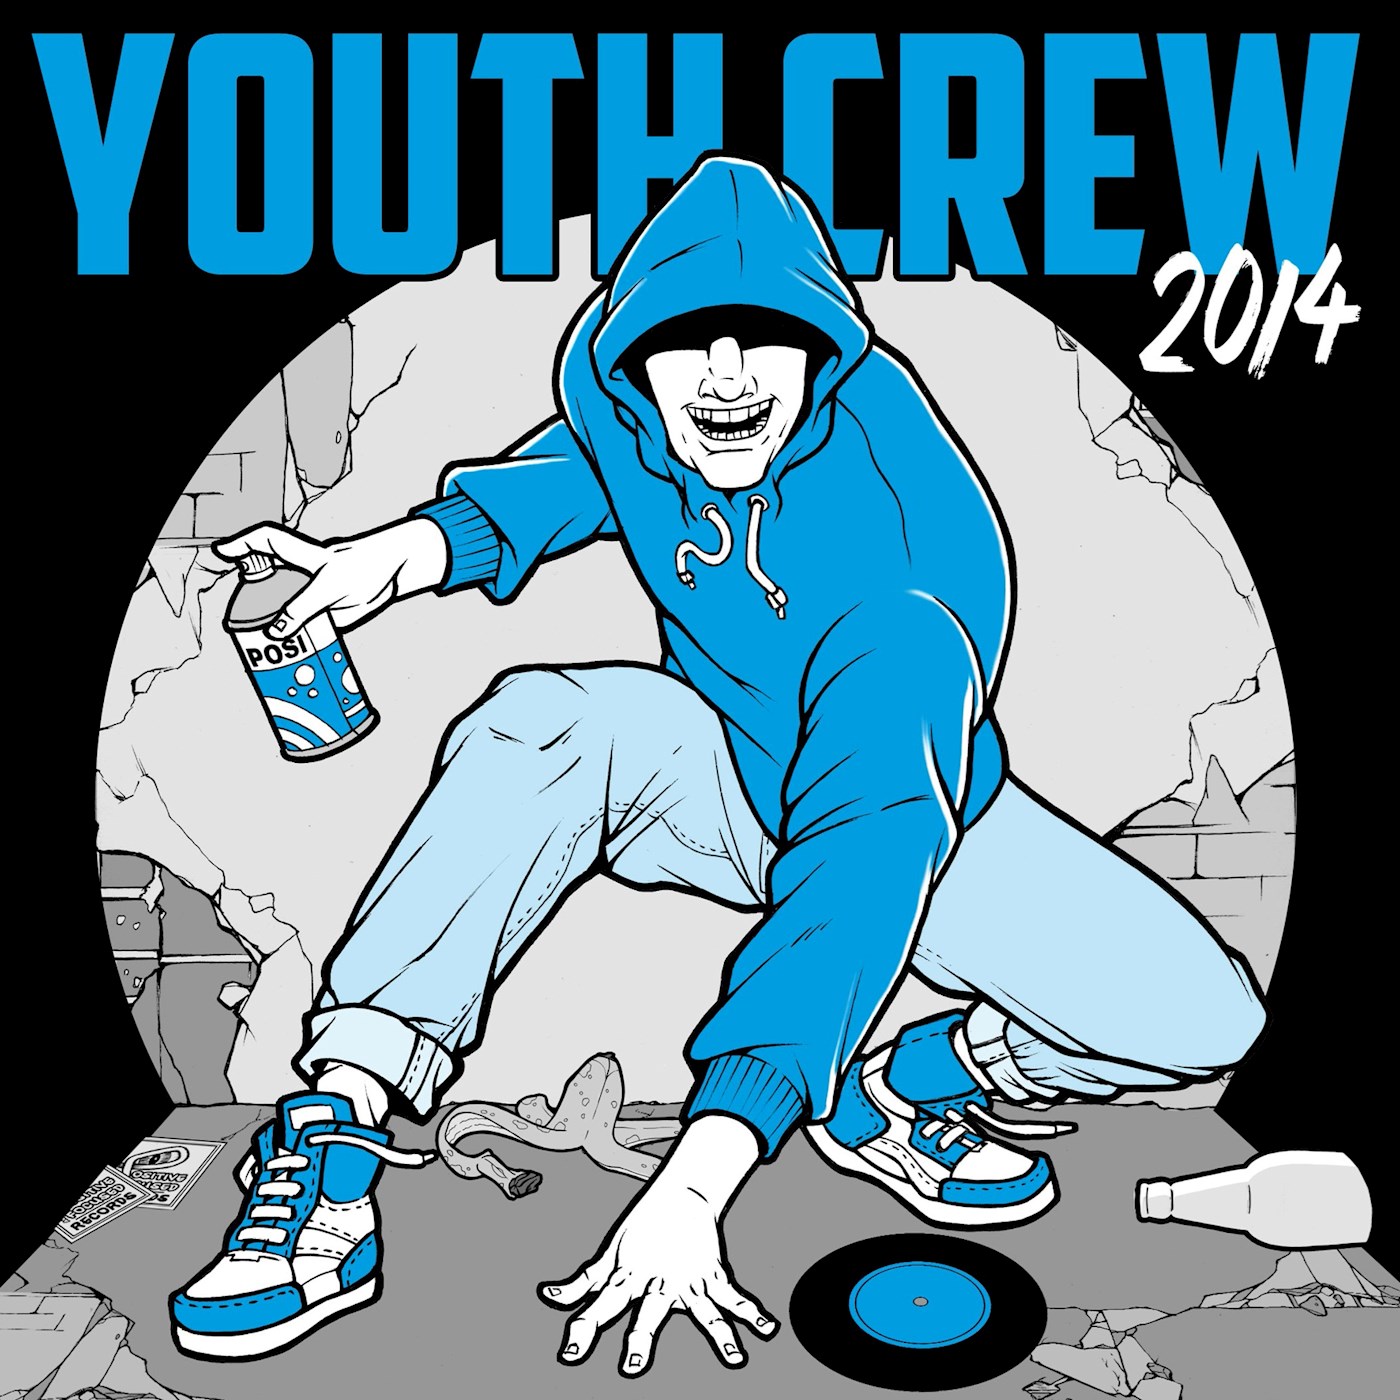 Youth Crew 2014